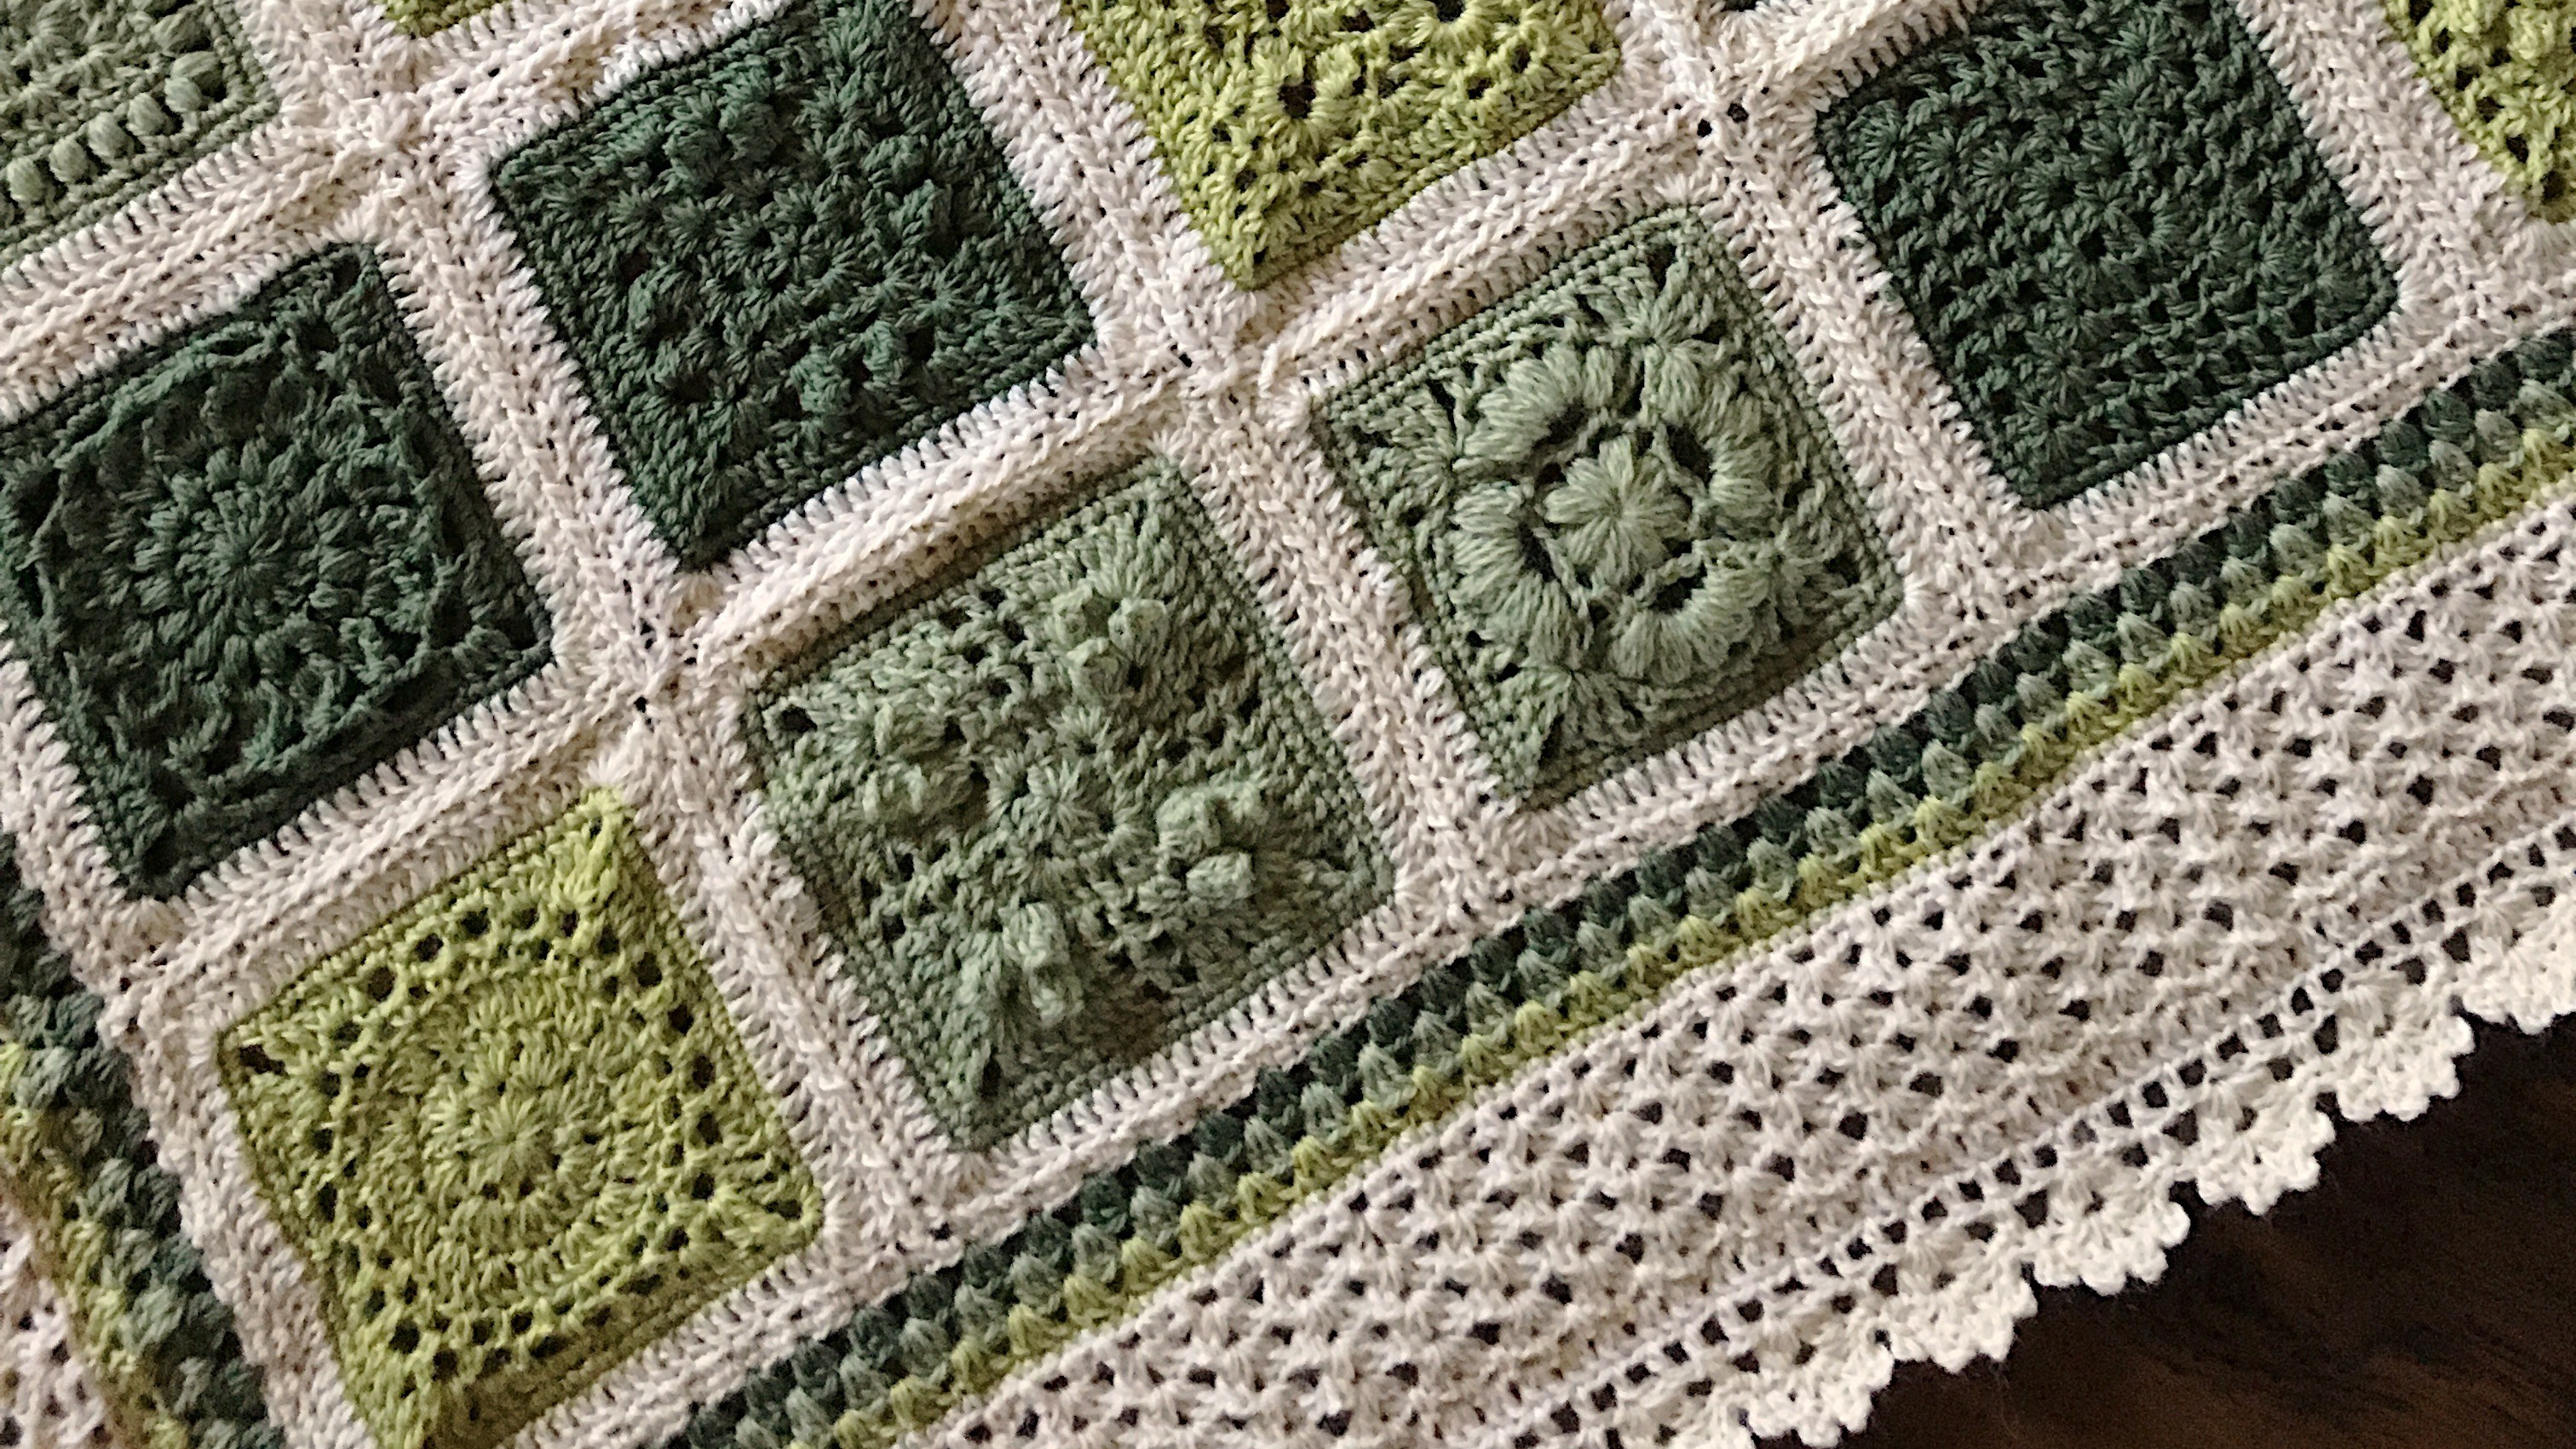 How To Repair an Afghan  Crochet crafts, Crochet, Crochet blanket